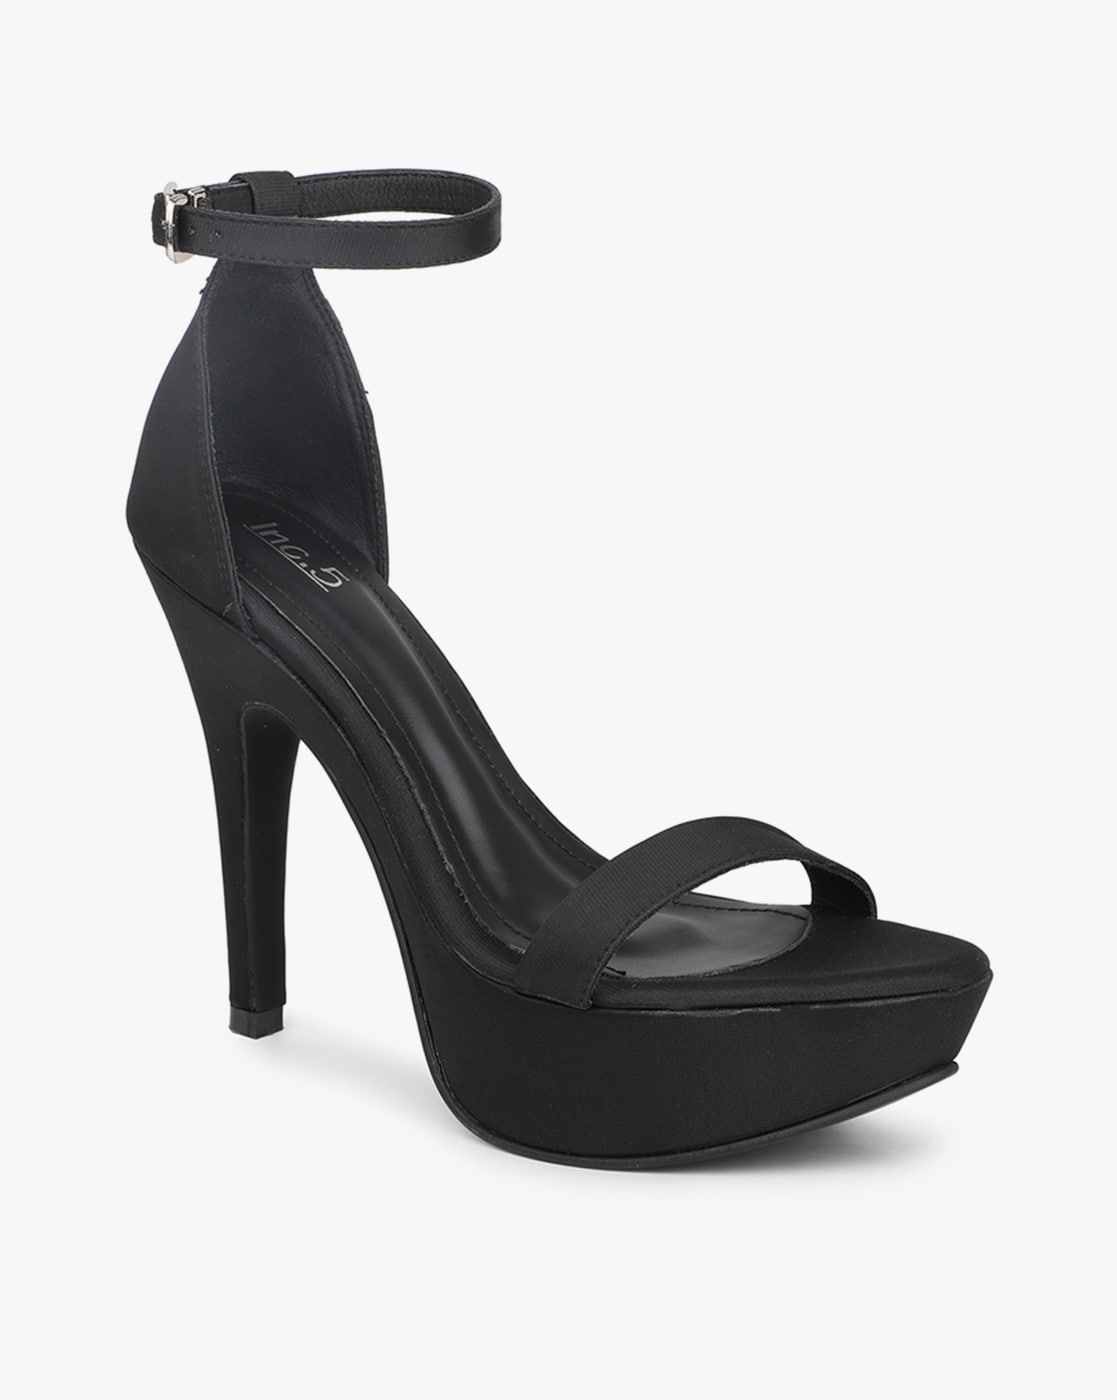 Women Ankle Boots Platform Thin High Heels Short Booties Black Shoes Woman  | eBay